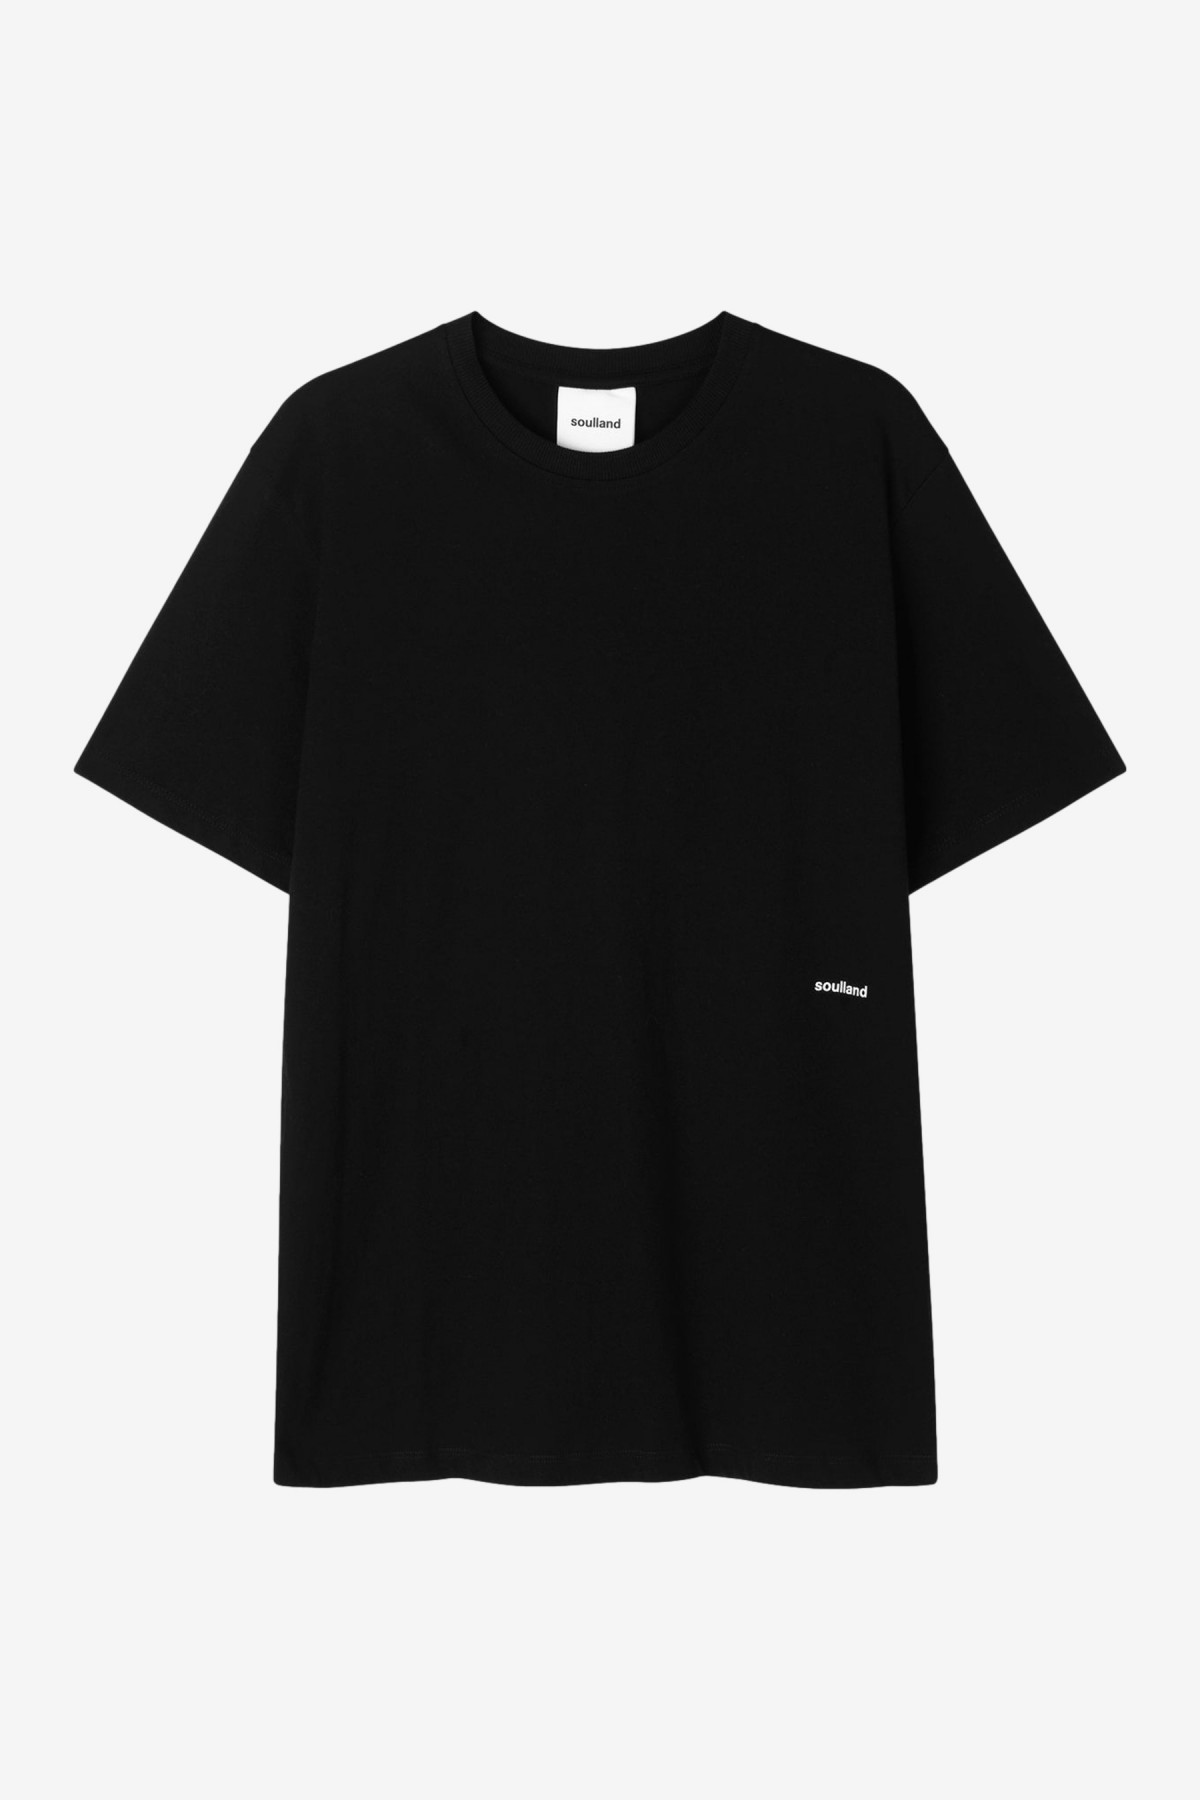 Soulland Coffey T-Shirt in Black